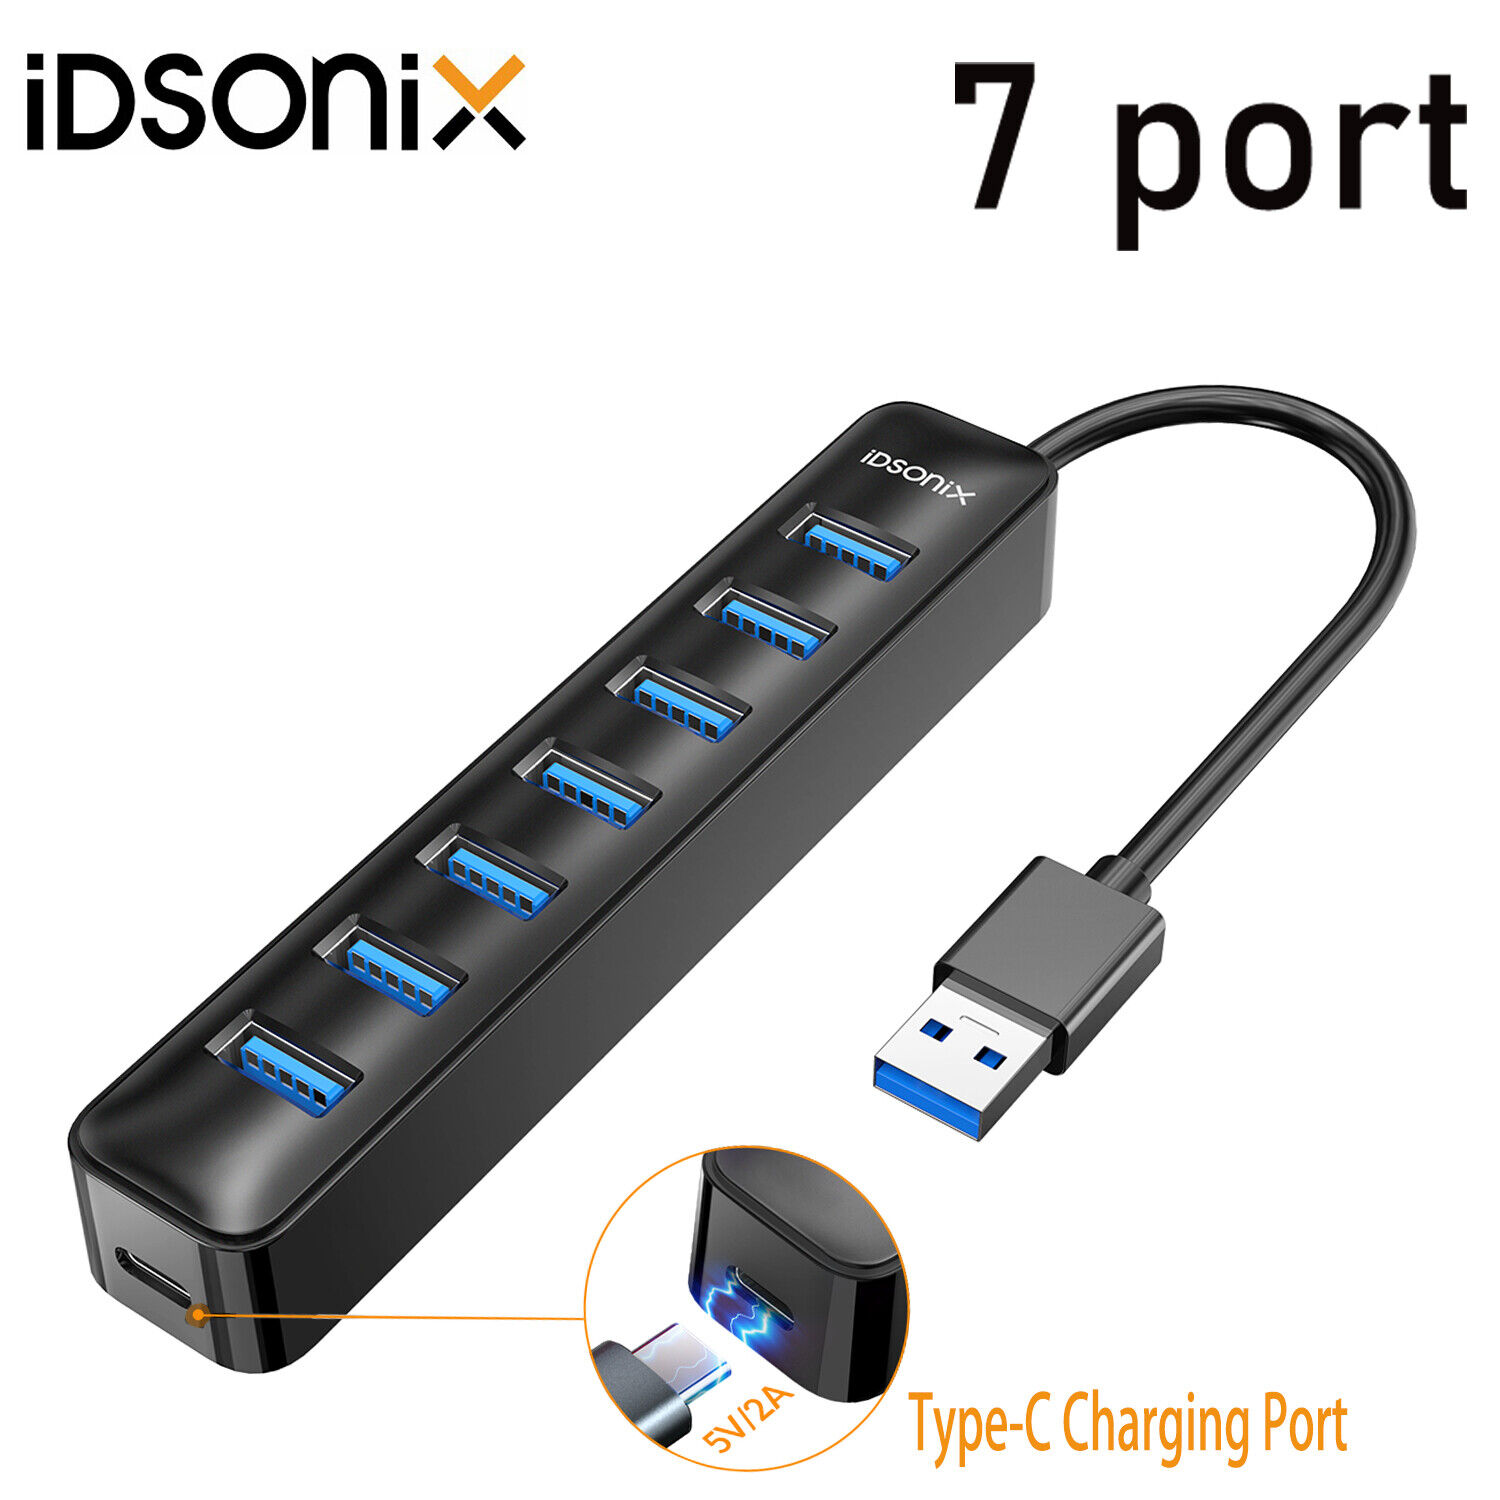 iDsonix 7-Port USB 3.0 Hub 5Gbps Portable Adapter for PC Laptop Notebook Desktop